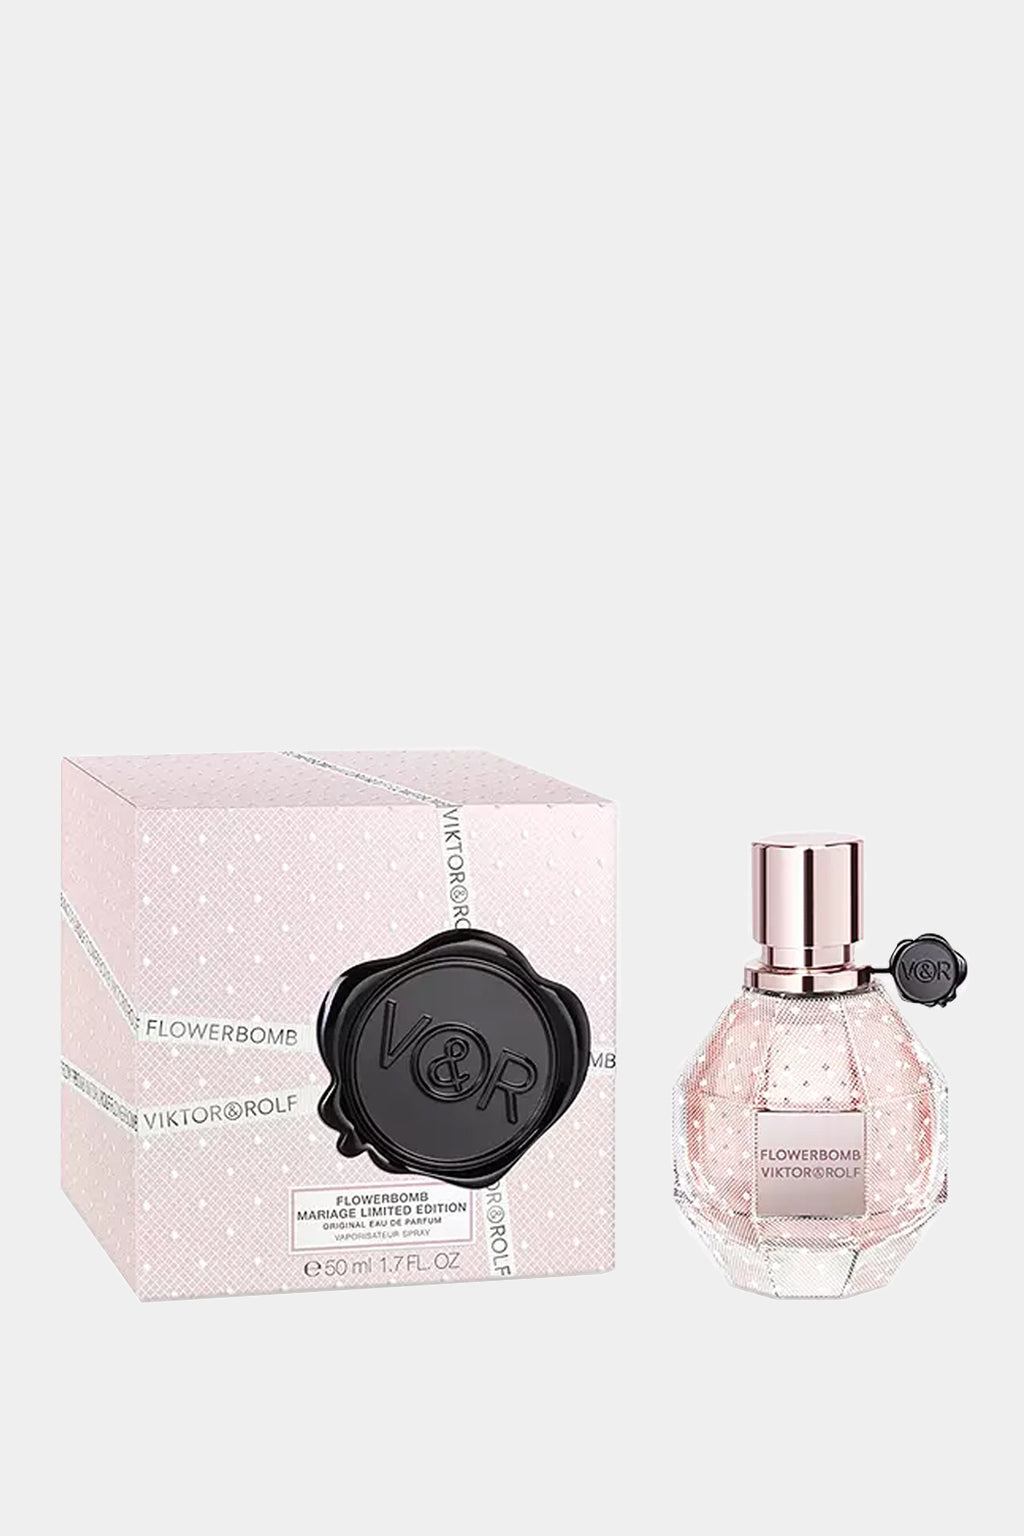 Viktor & Rolf - Flower Bomb Mariage Limited Edition - Eau de Parfum, 50 ml